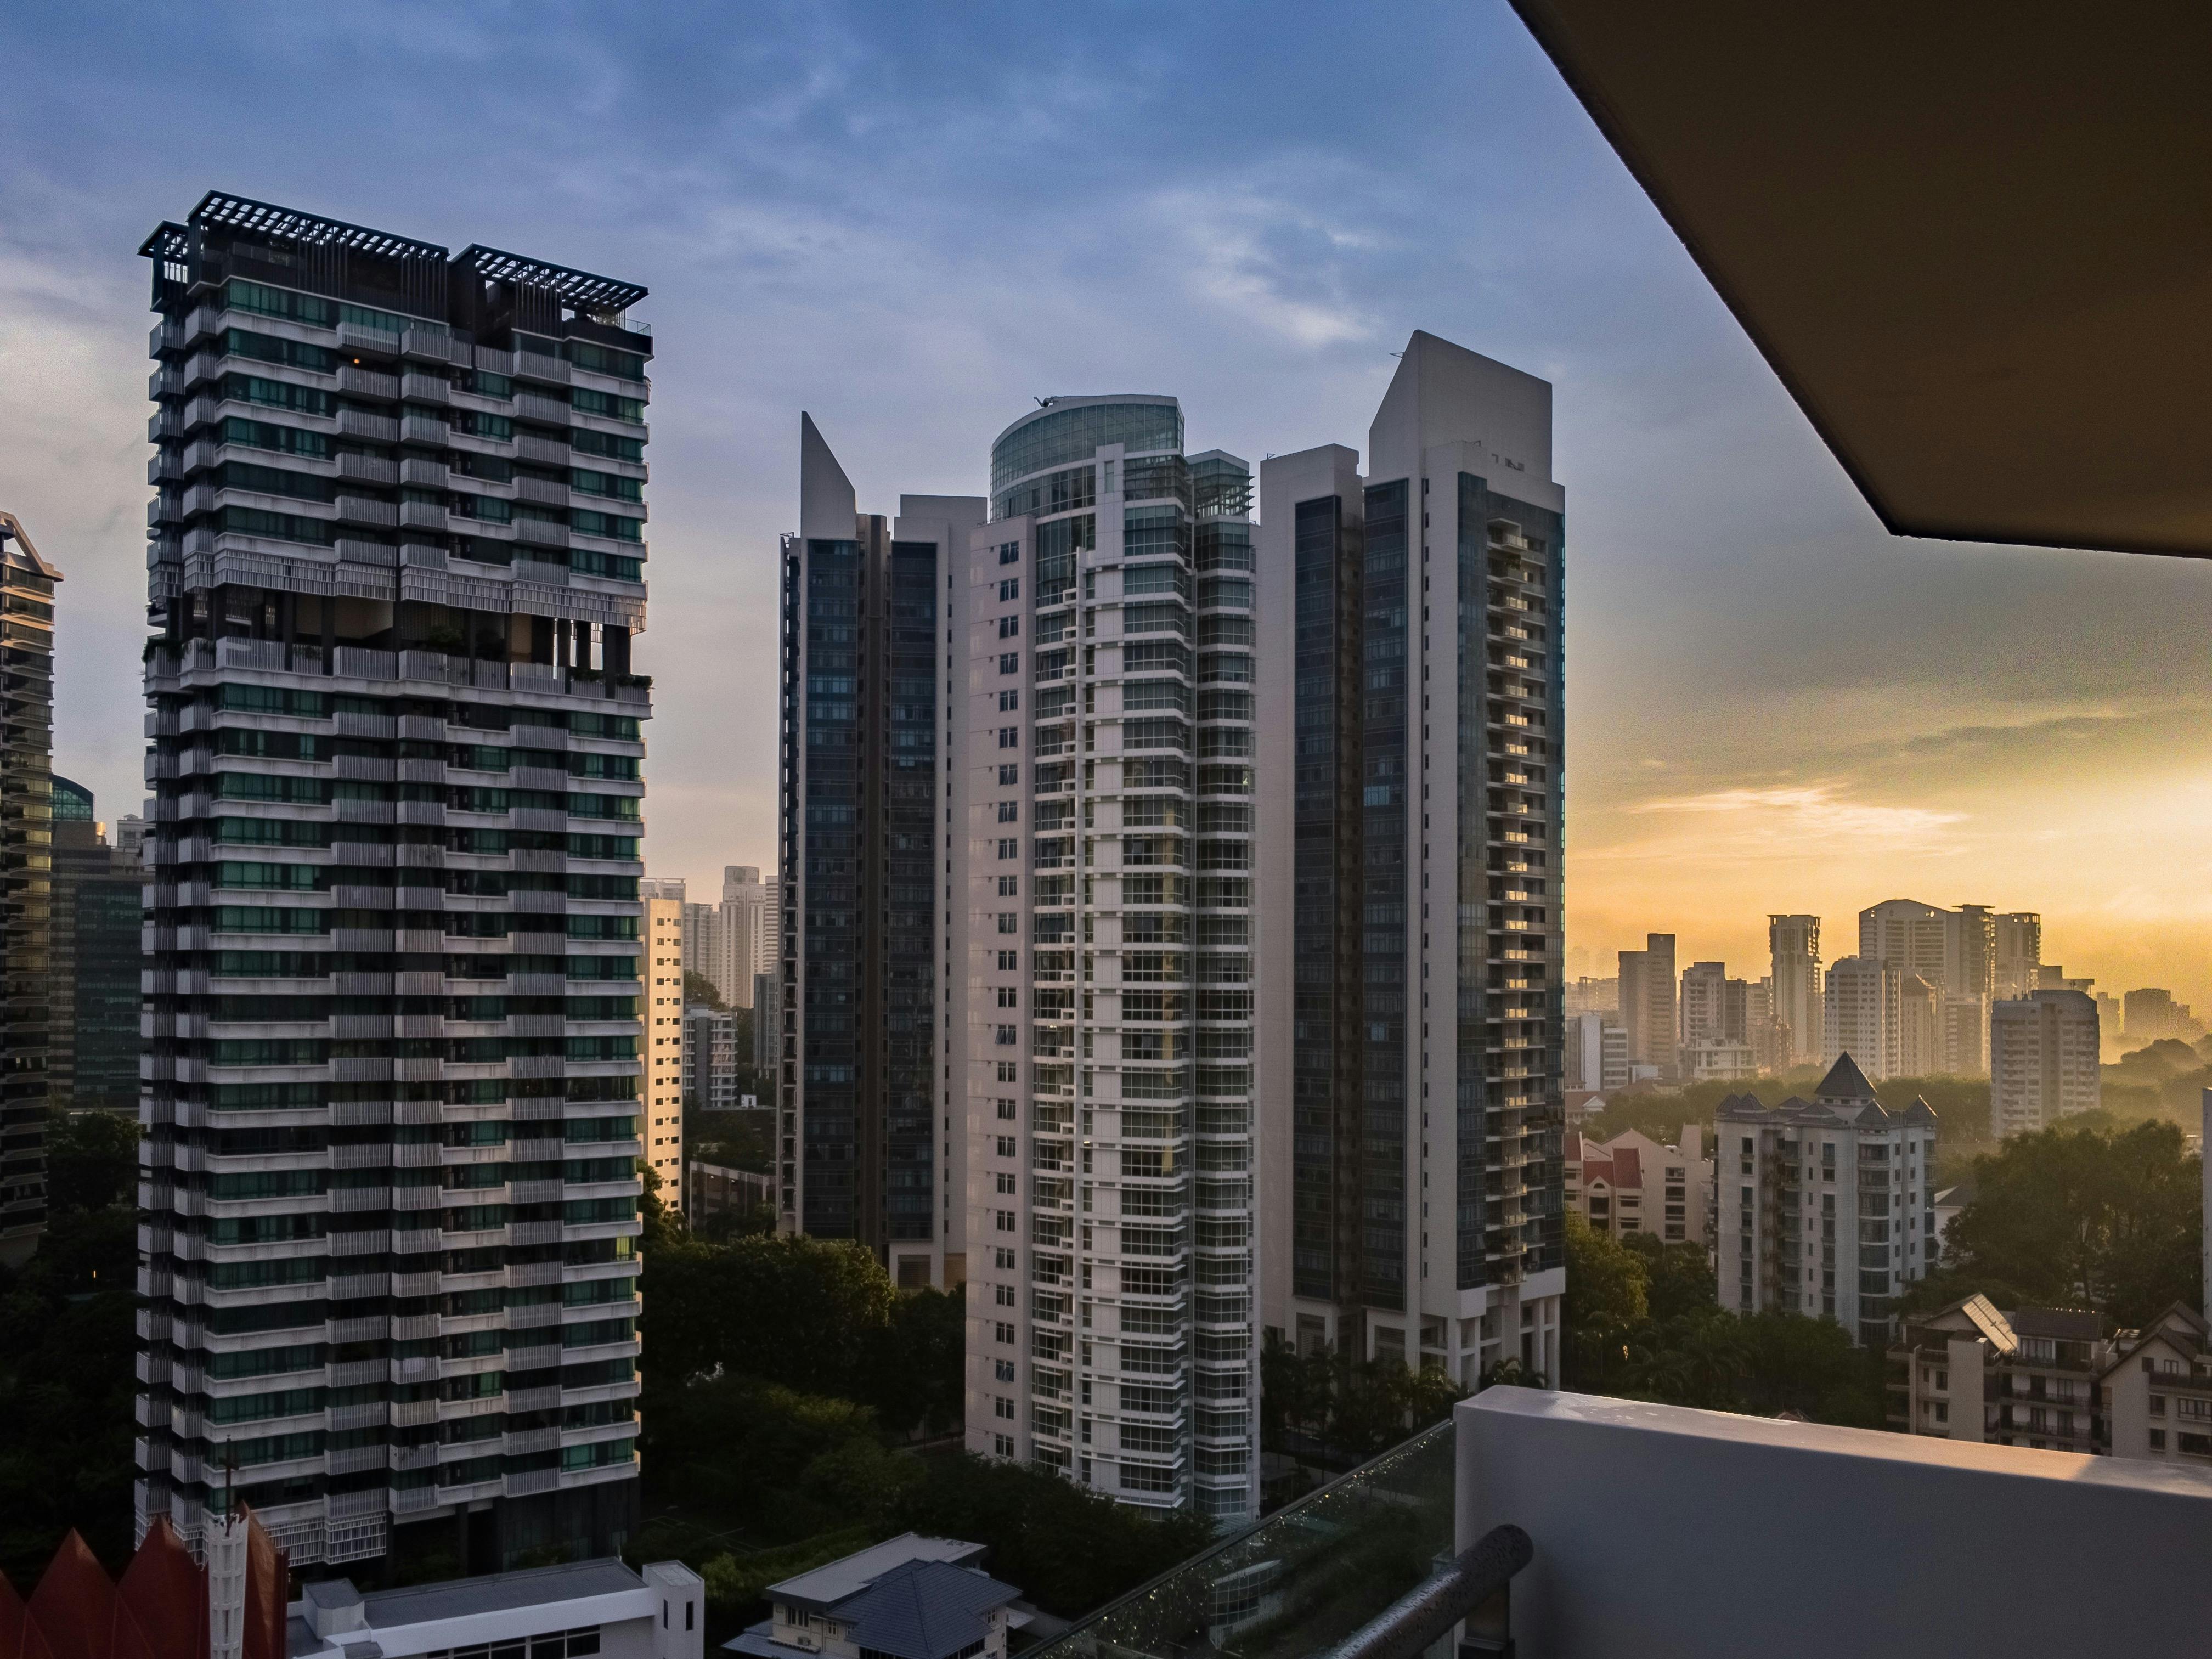 pexels-photo-825582.jpeg?cs=srgb&amp;dl=1-surrey-road-view-high-rise-apartment-singapore-sunset-825582.jpg&amp;fm=jpg